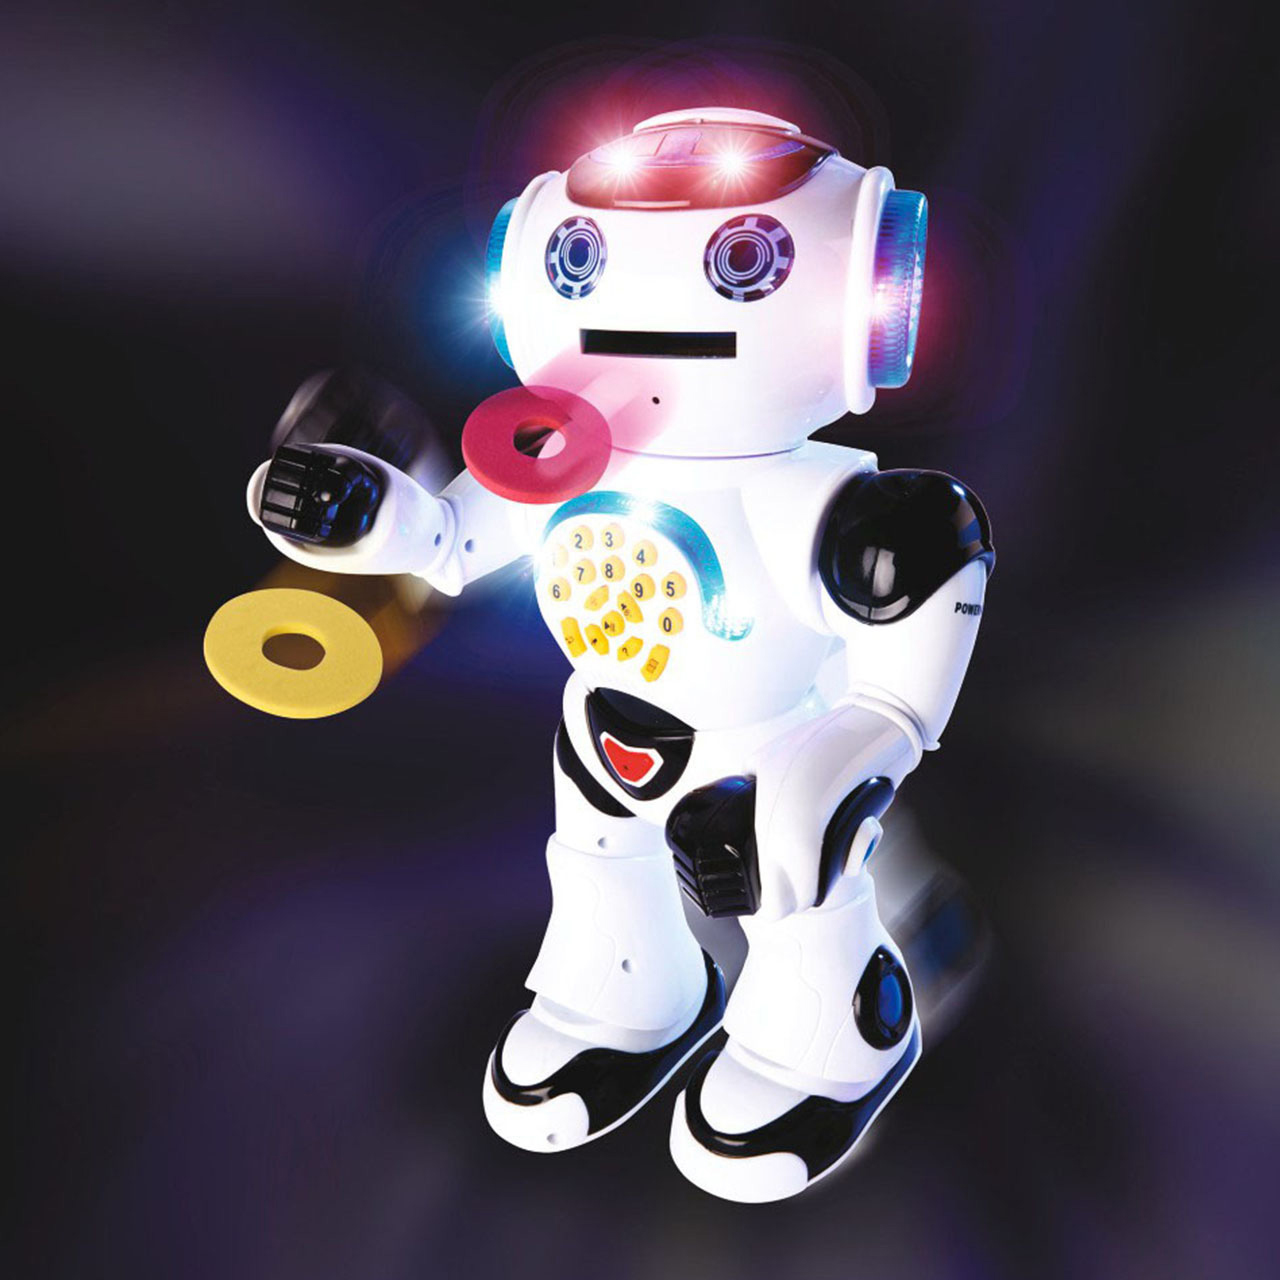 Powerman® Interactive Robot